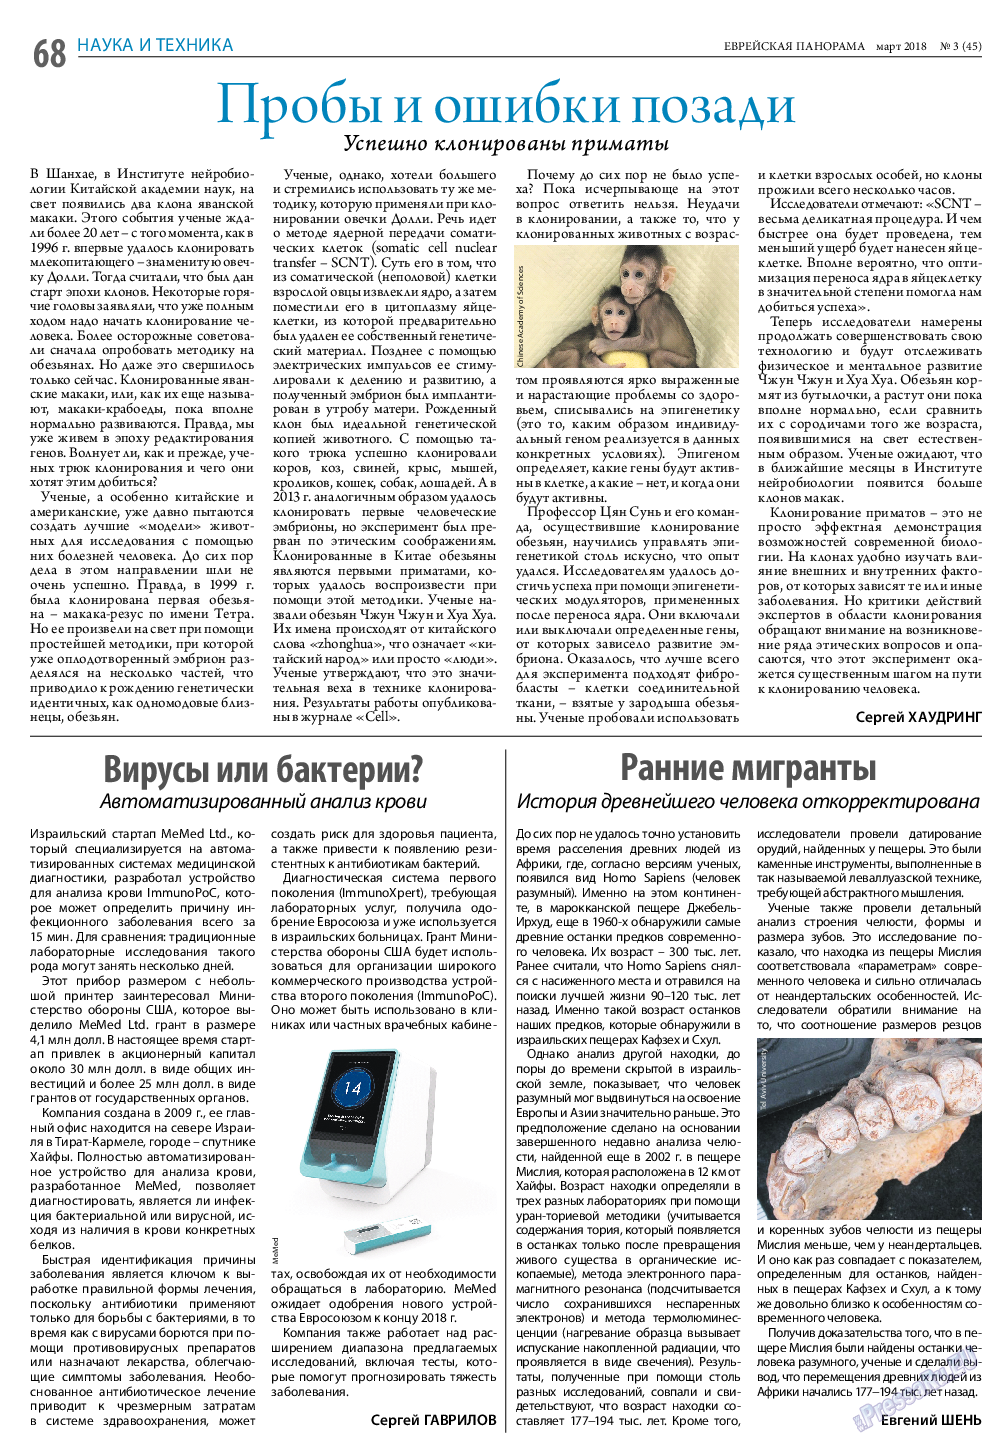 Еврейская панорама, газета. 2018 №3 стр.68